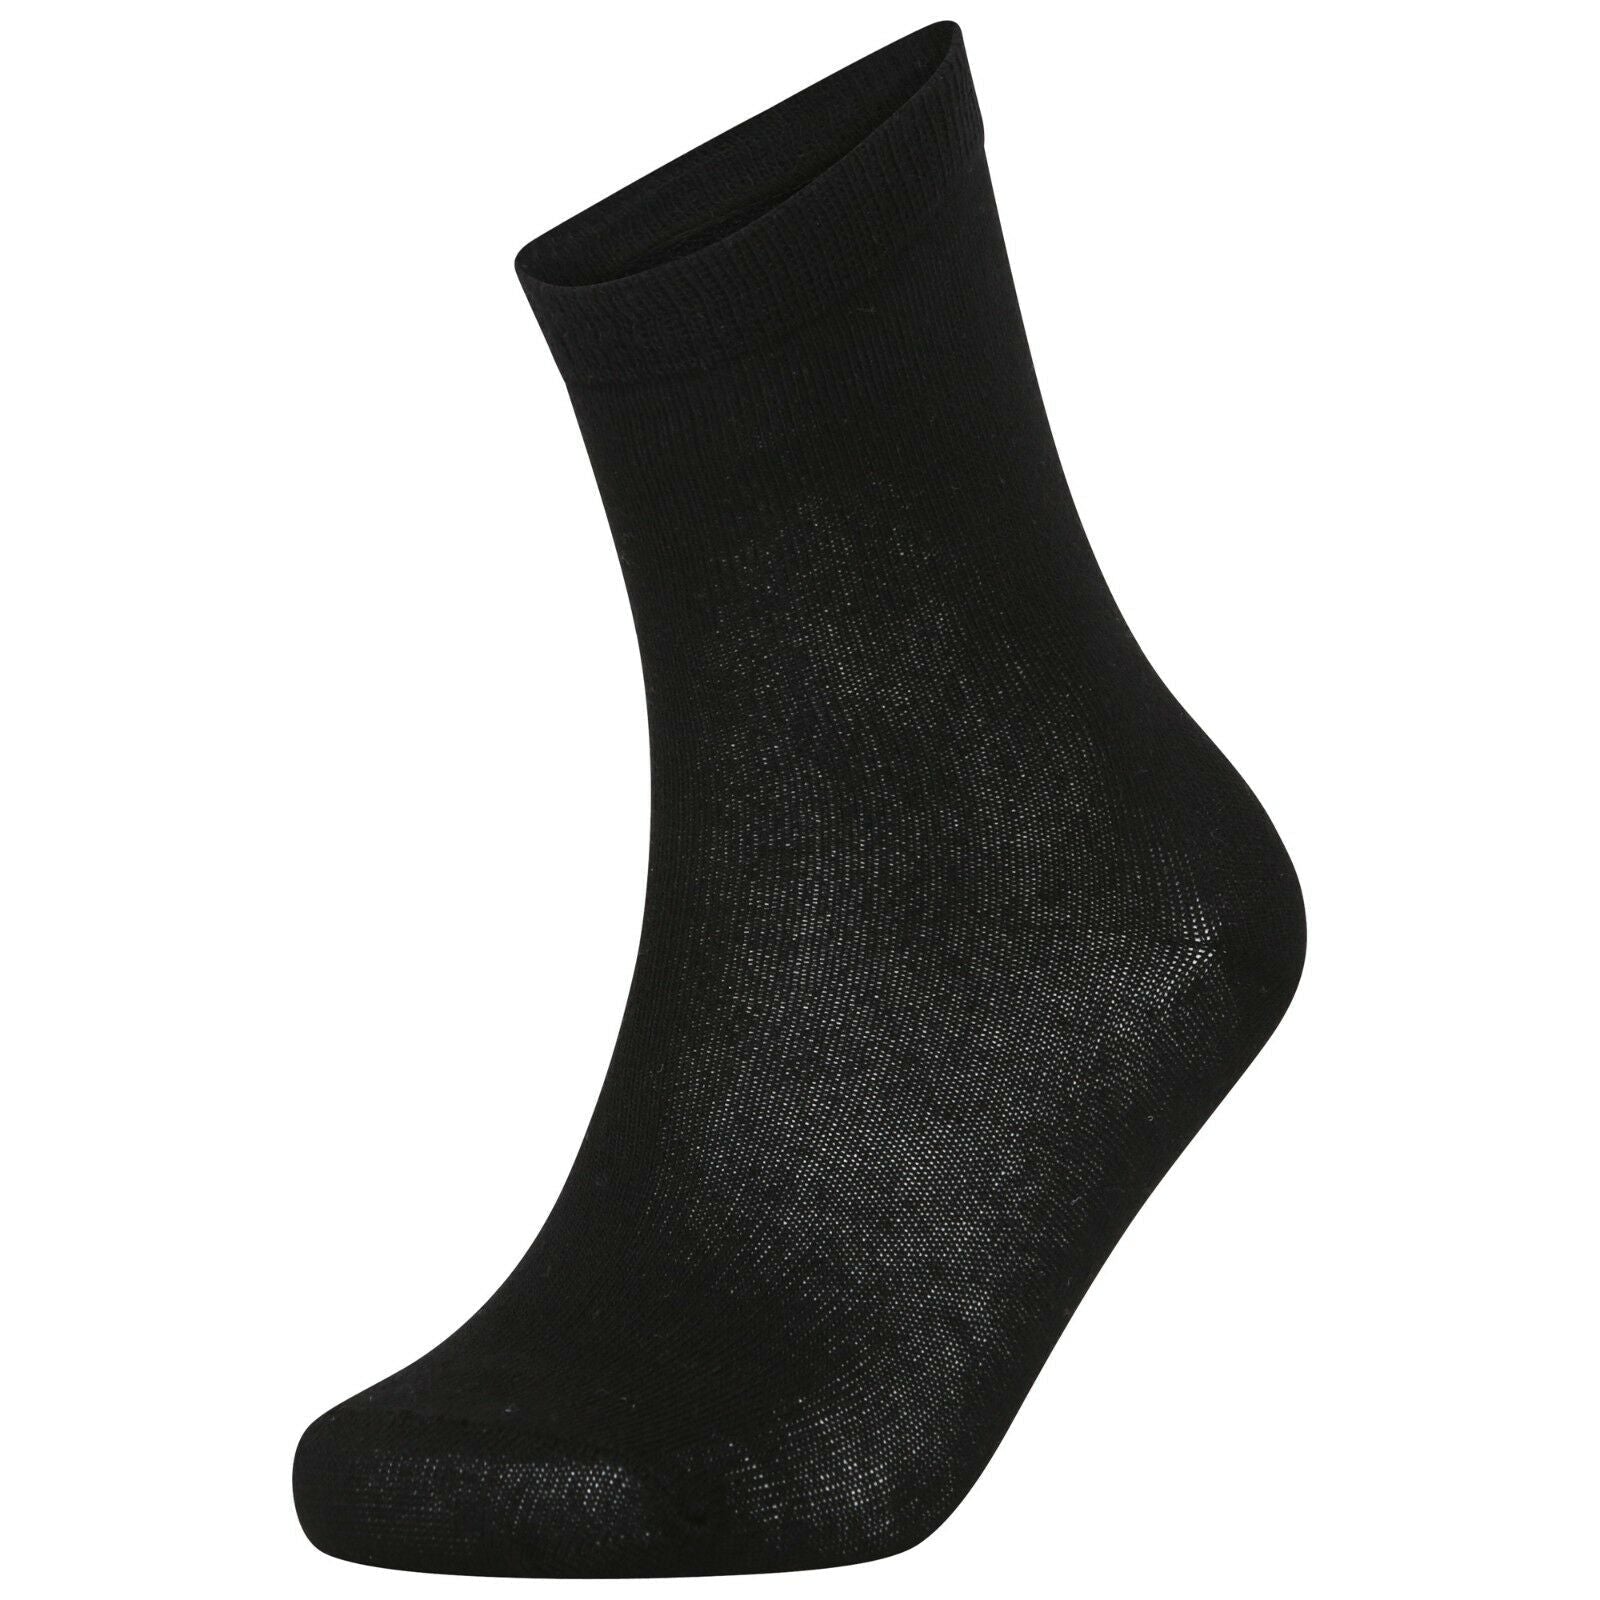 Girls Boys Unisex Children's Kids Ankle Socks Plain Cotton Mix  Back to School Socks 6 Pairs -Black